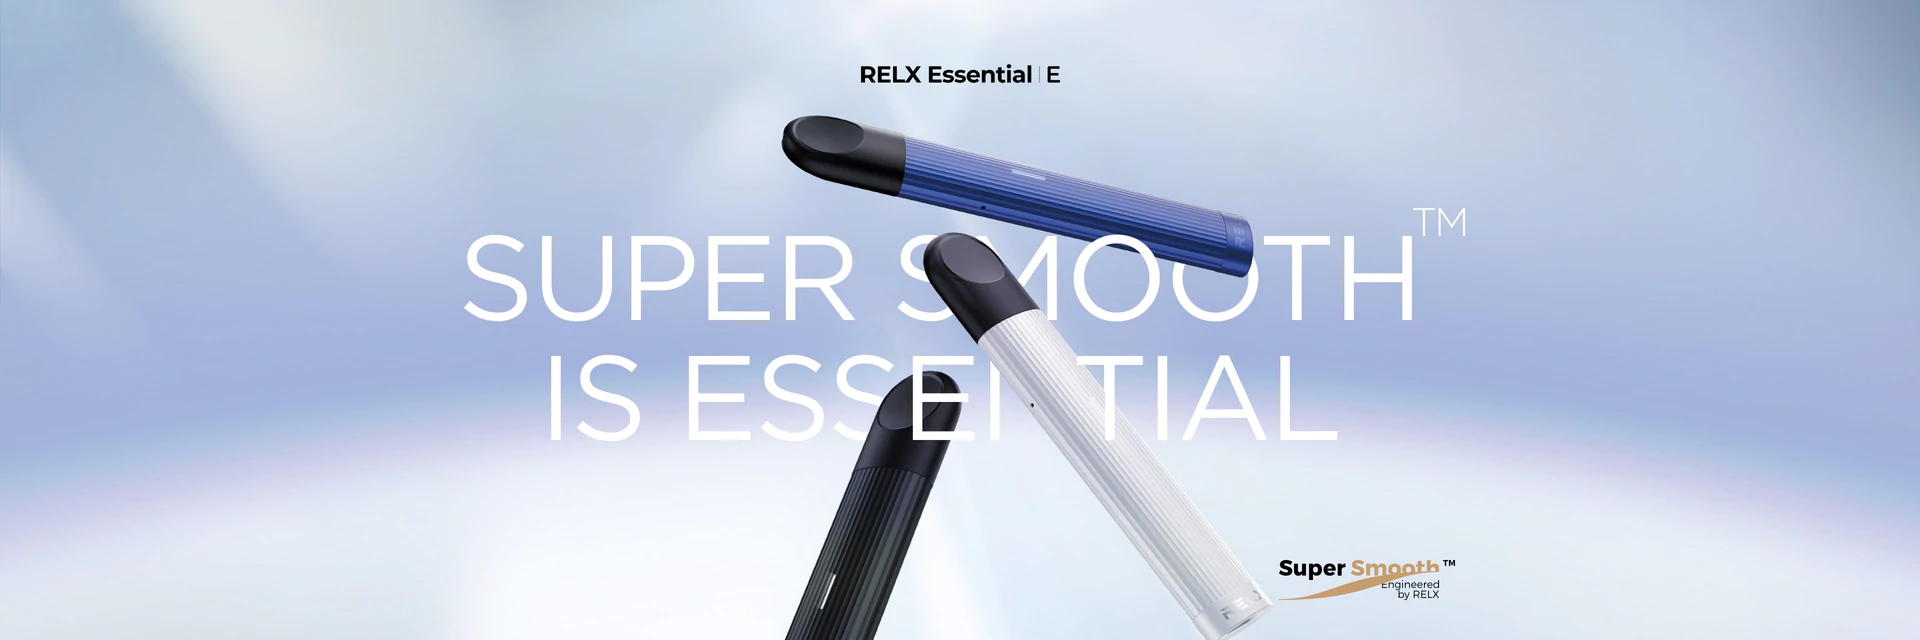 RELX Phantom รุ่นใหม่ 5th Generation​ | RELX Thailand RELX Essential Device Vape Starter Kit